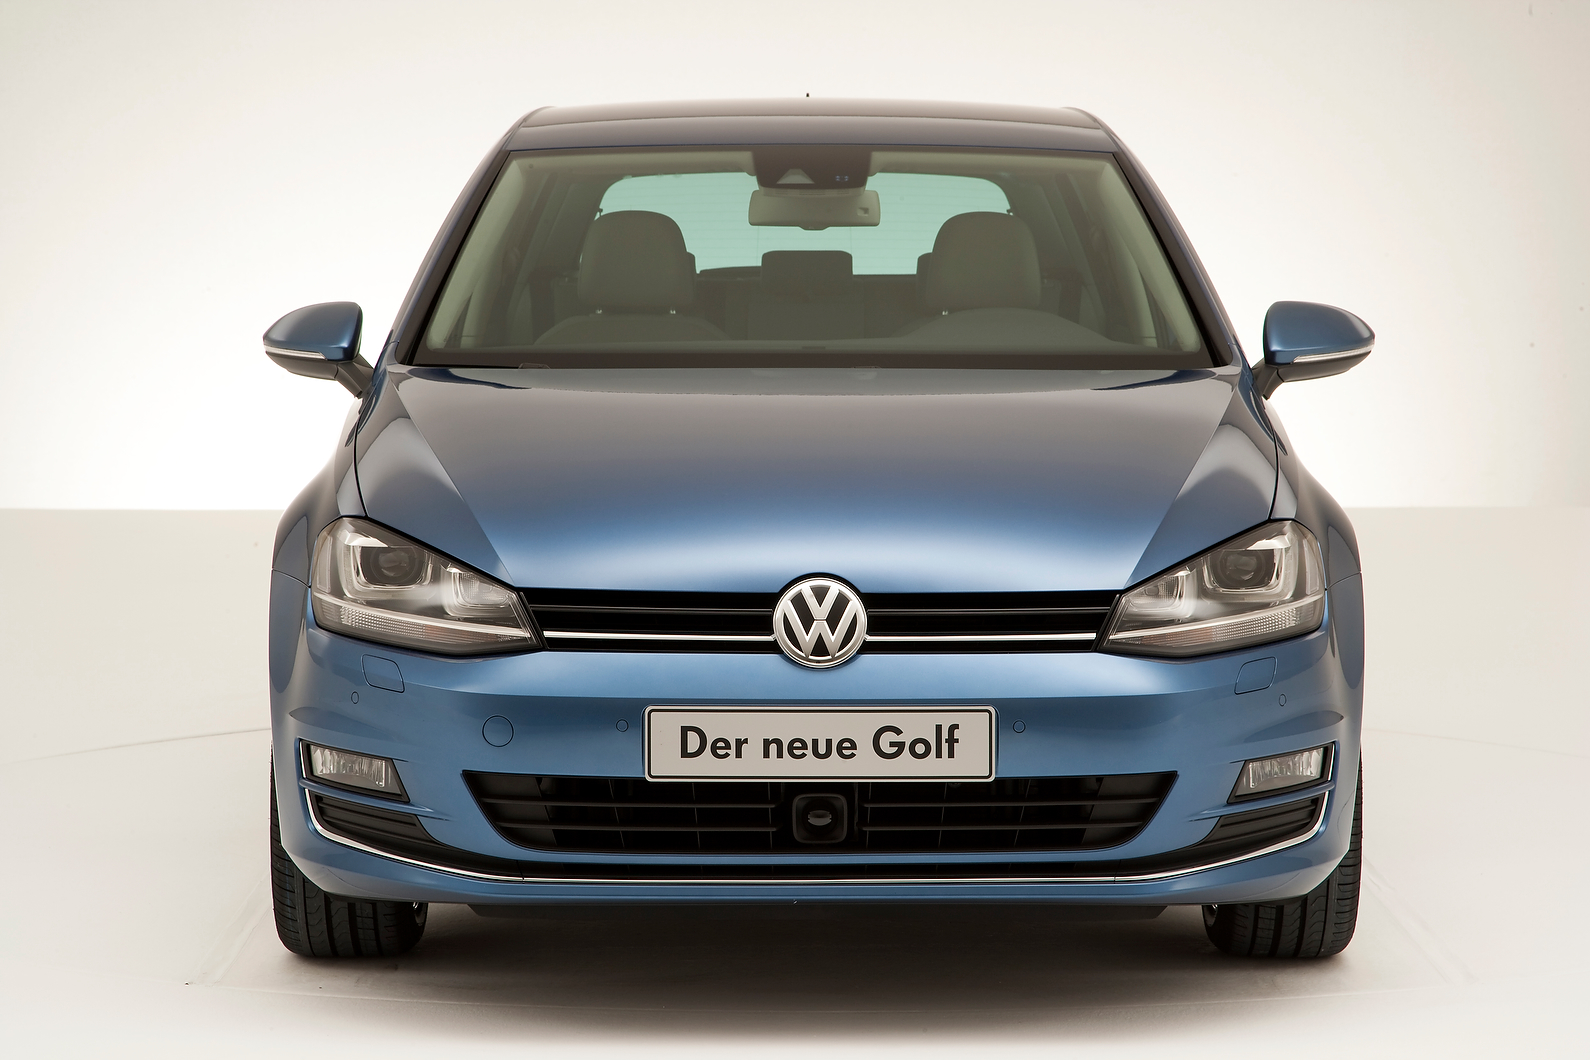 Volkswagen Golf on-sale dates revealed: exclusive gallery